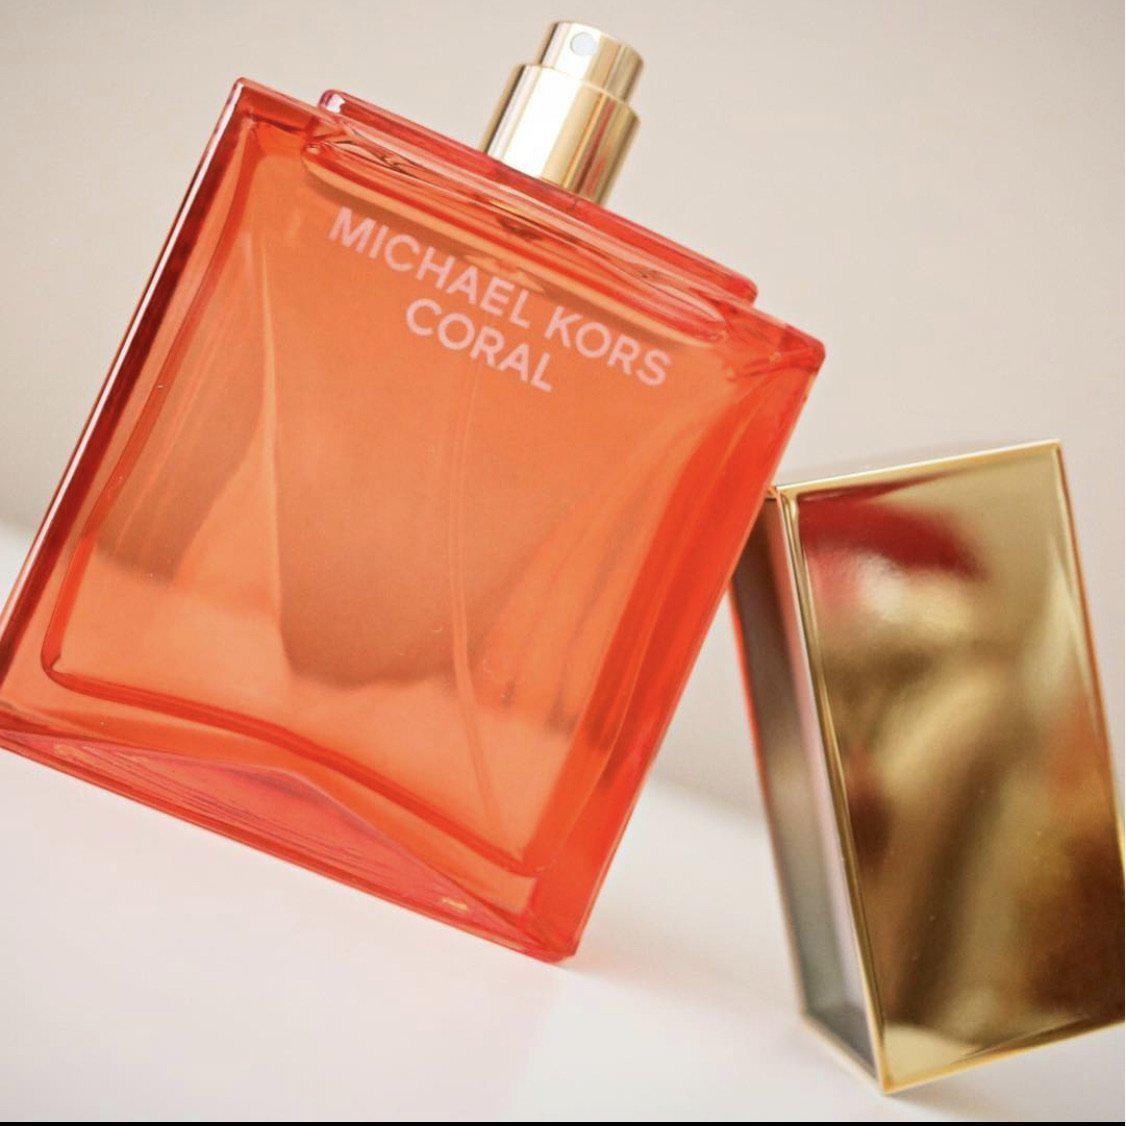 michael kors perfume orange bottle